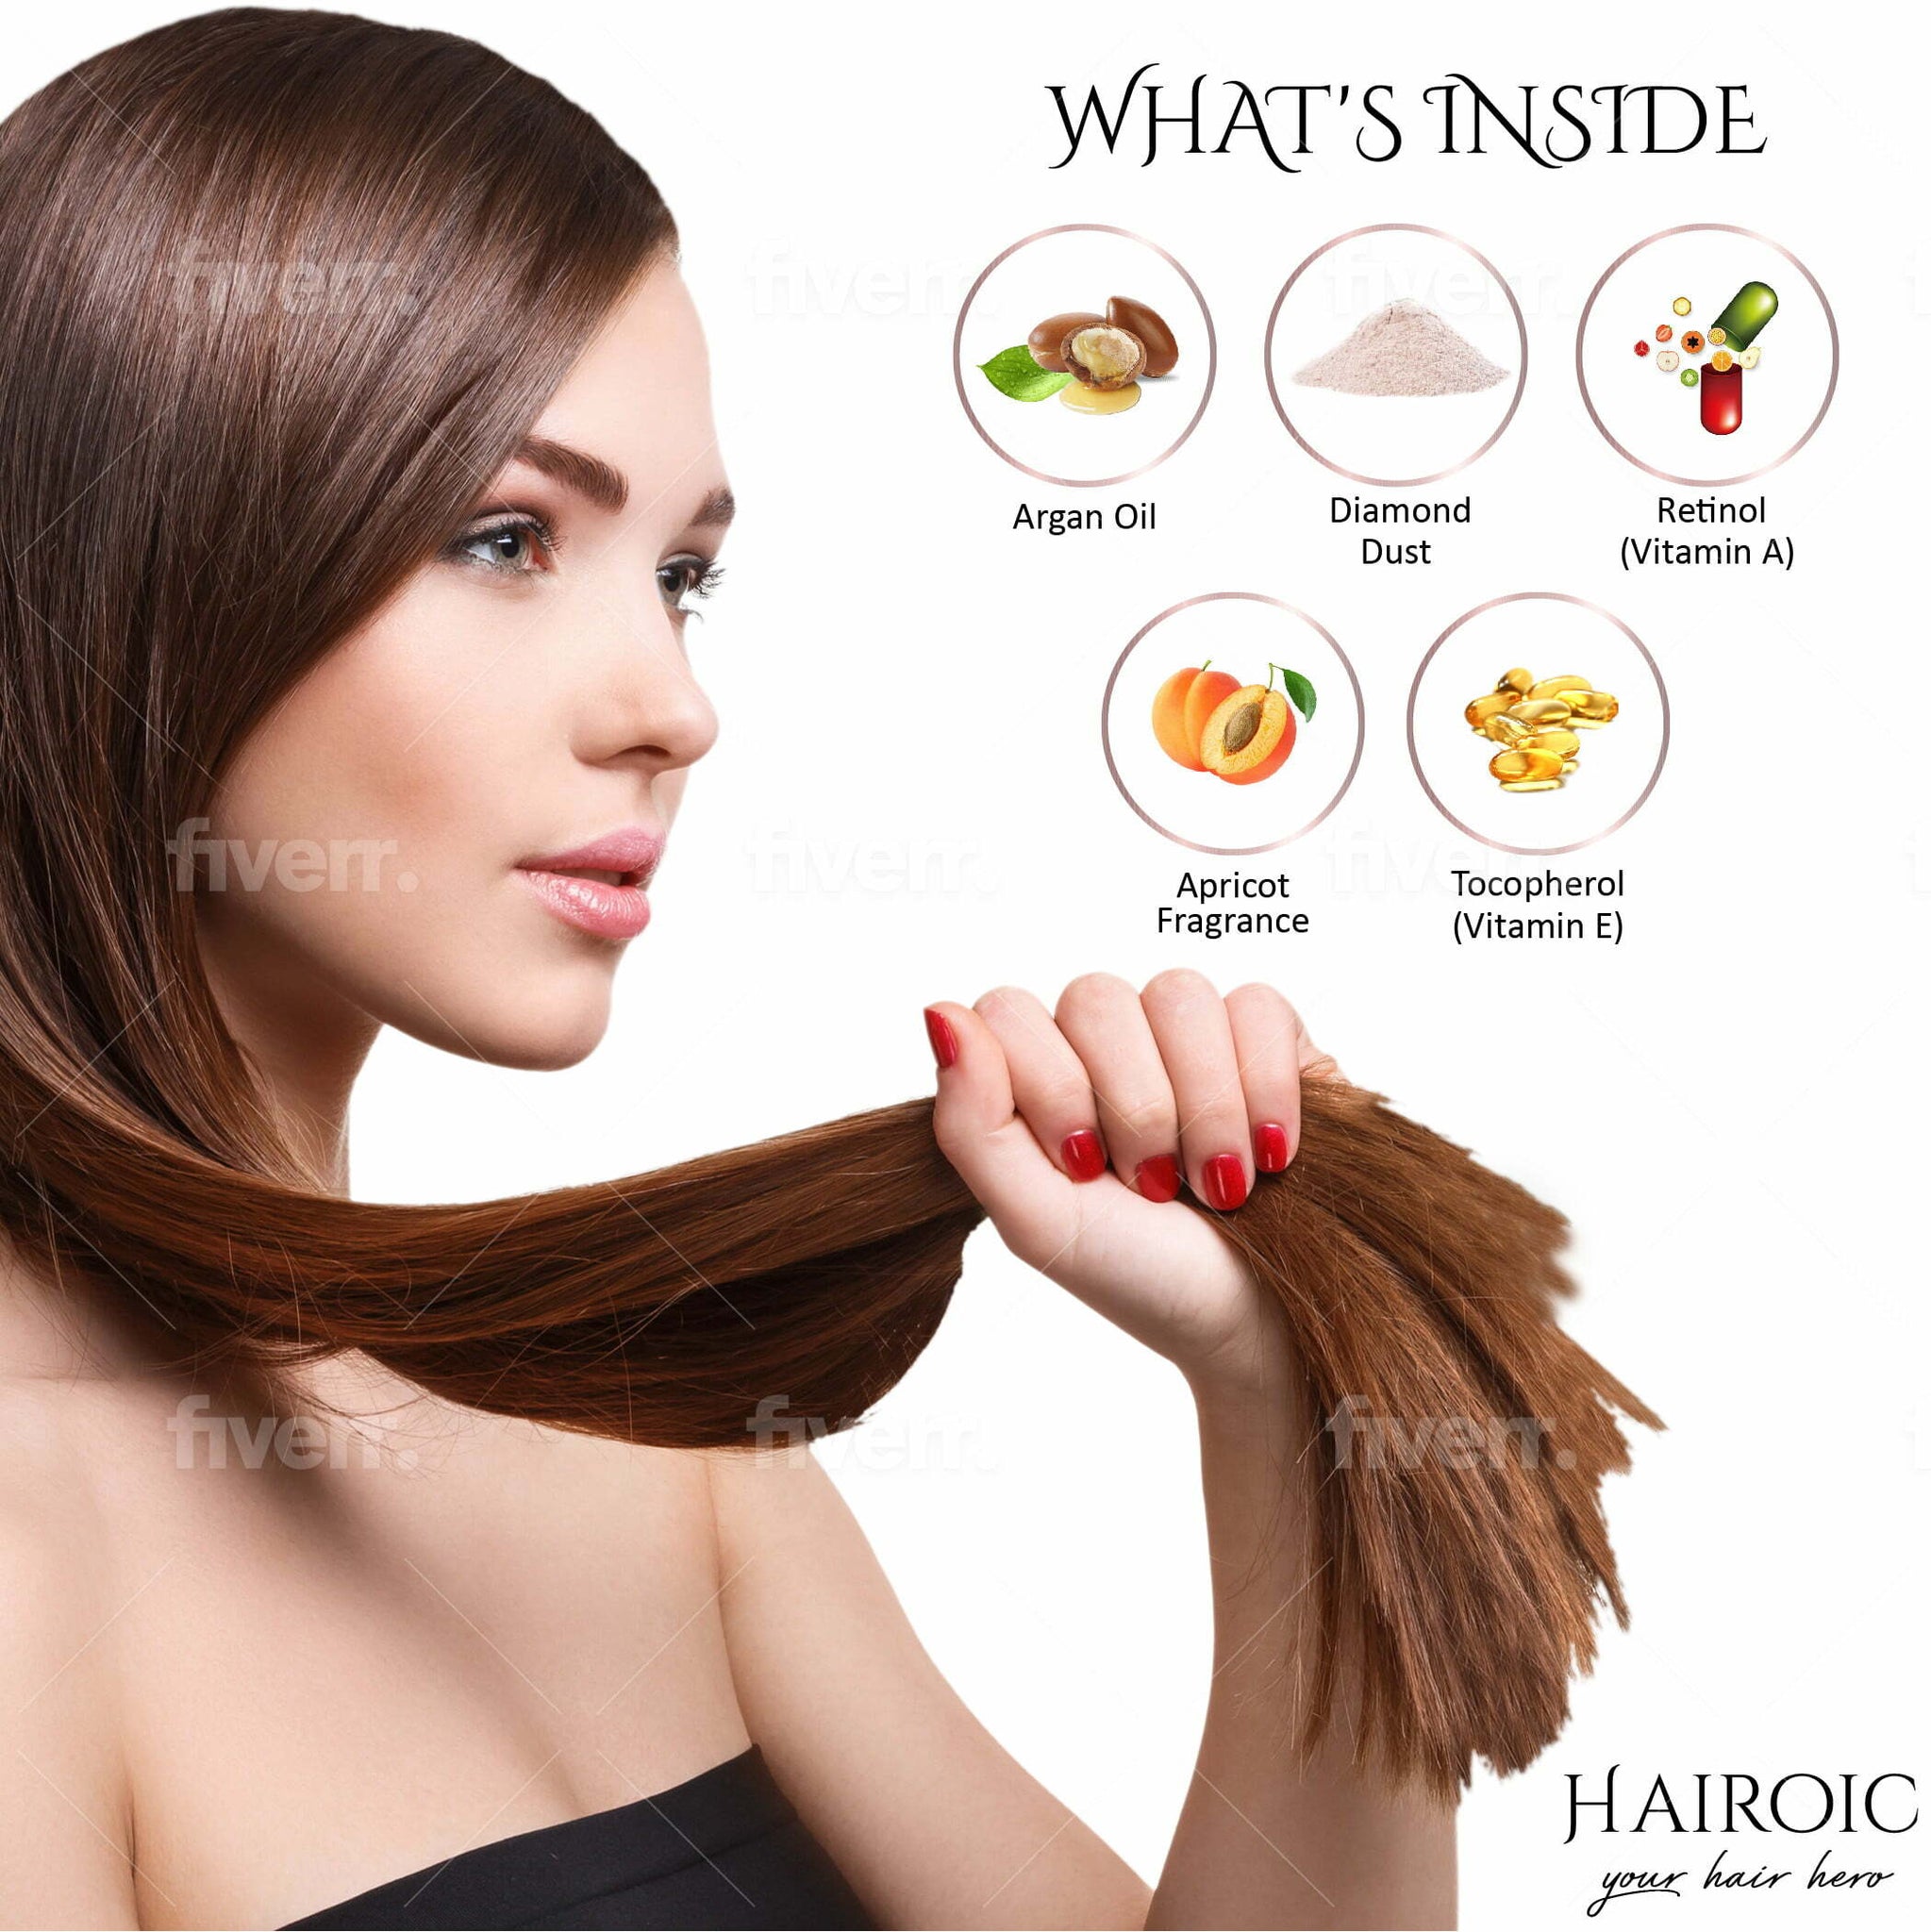 Hair Serum For Frizzy Hair&Heat Protectant,Argan Oil Growth Serum - Brilliance New York Online